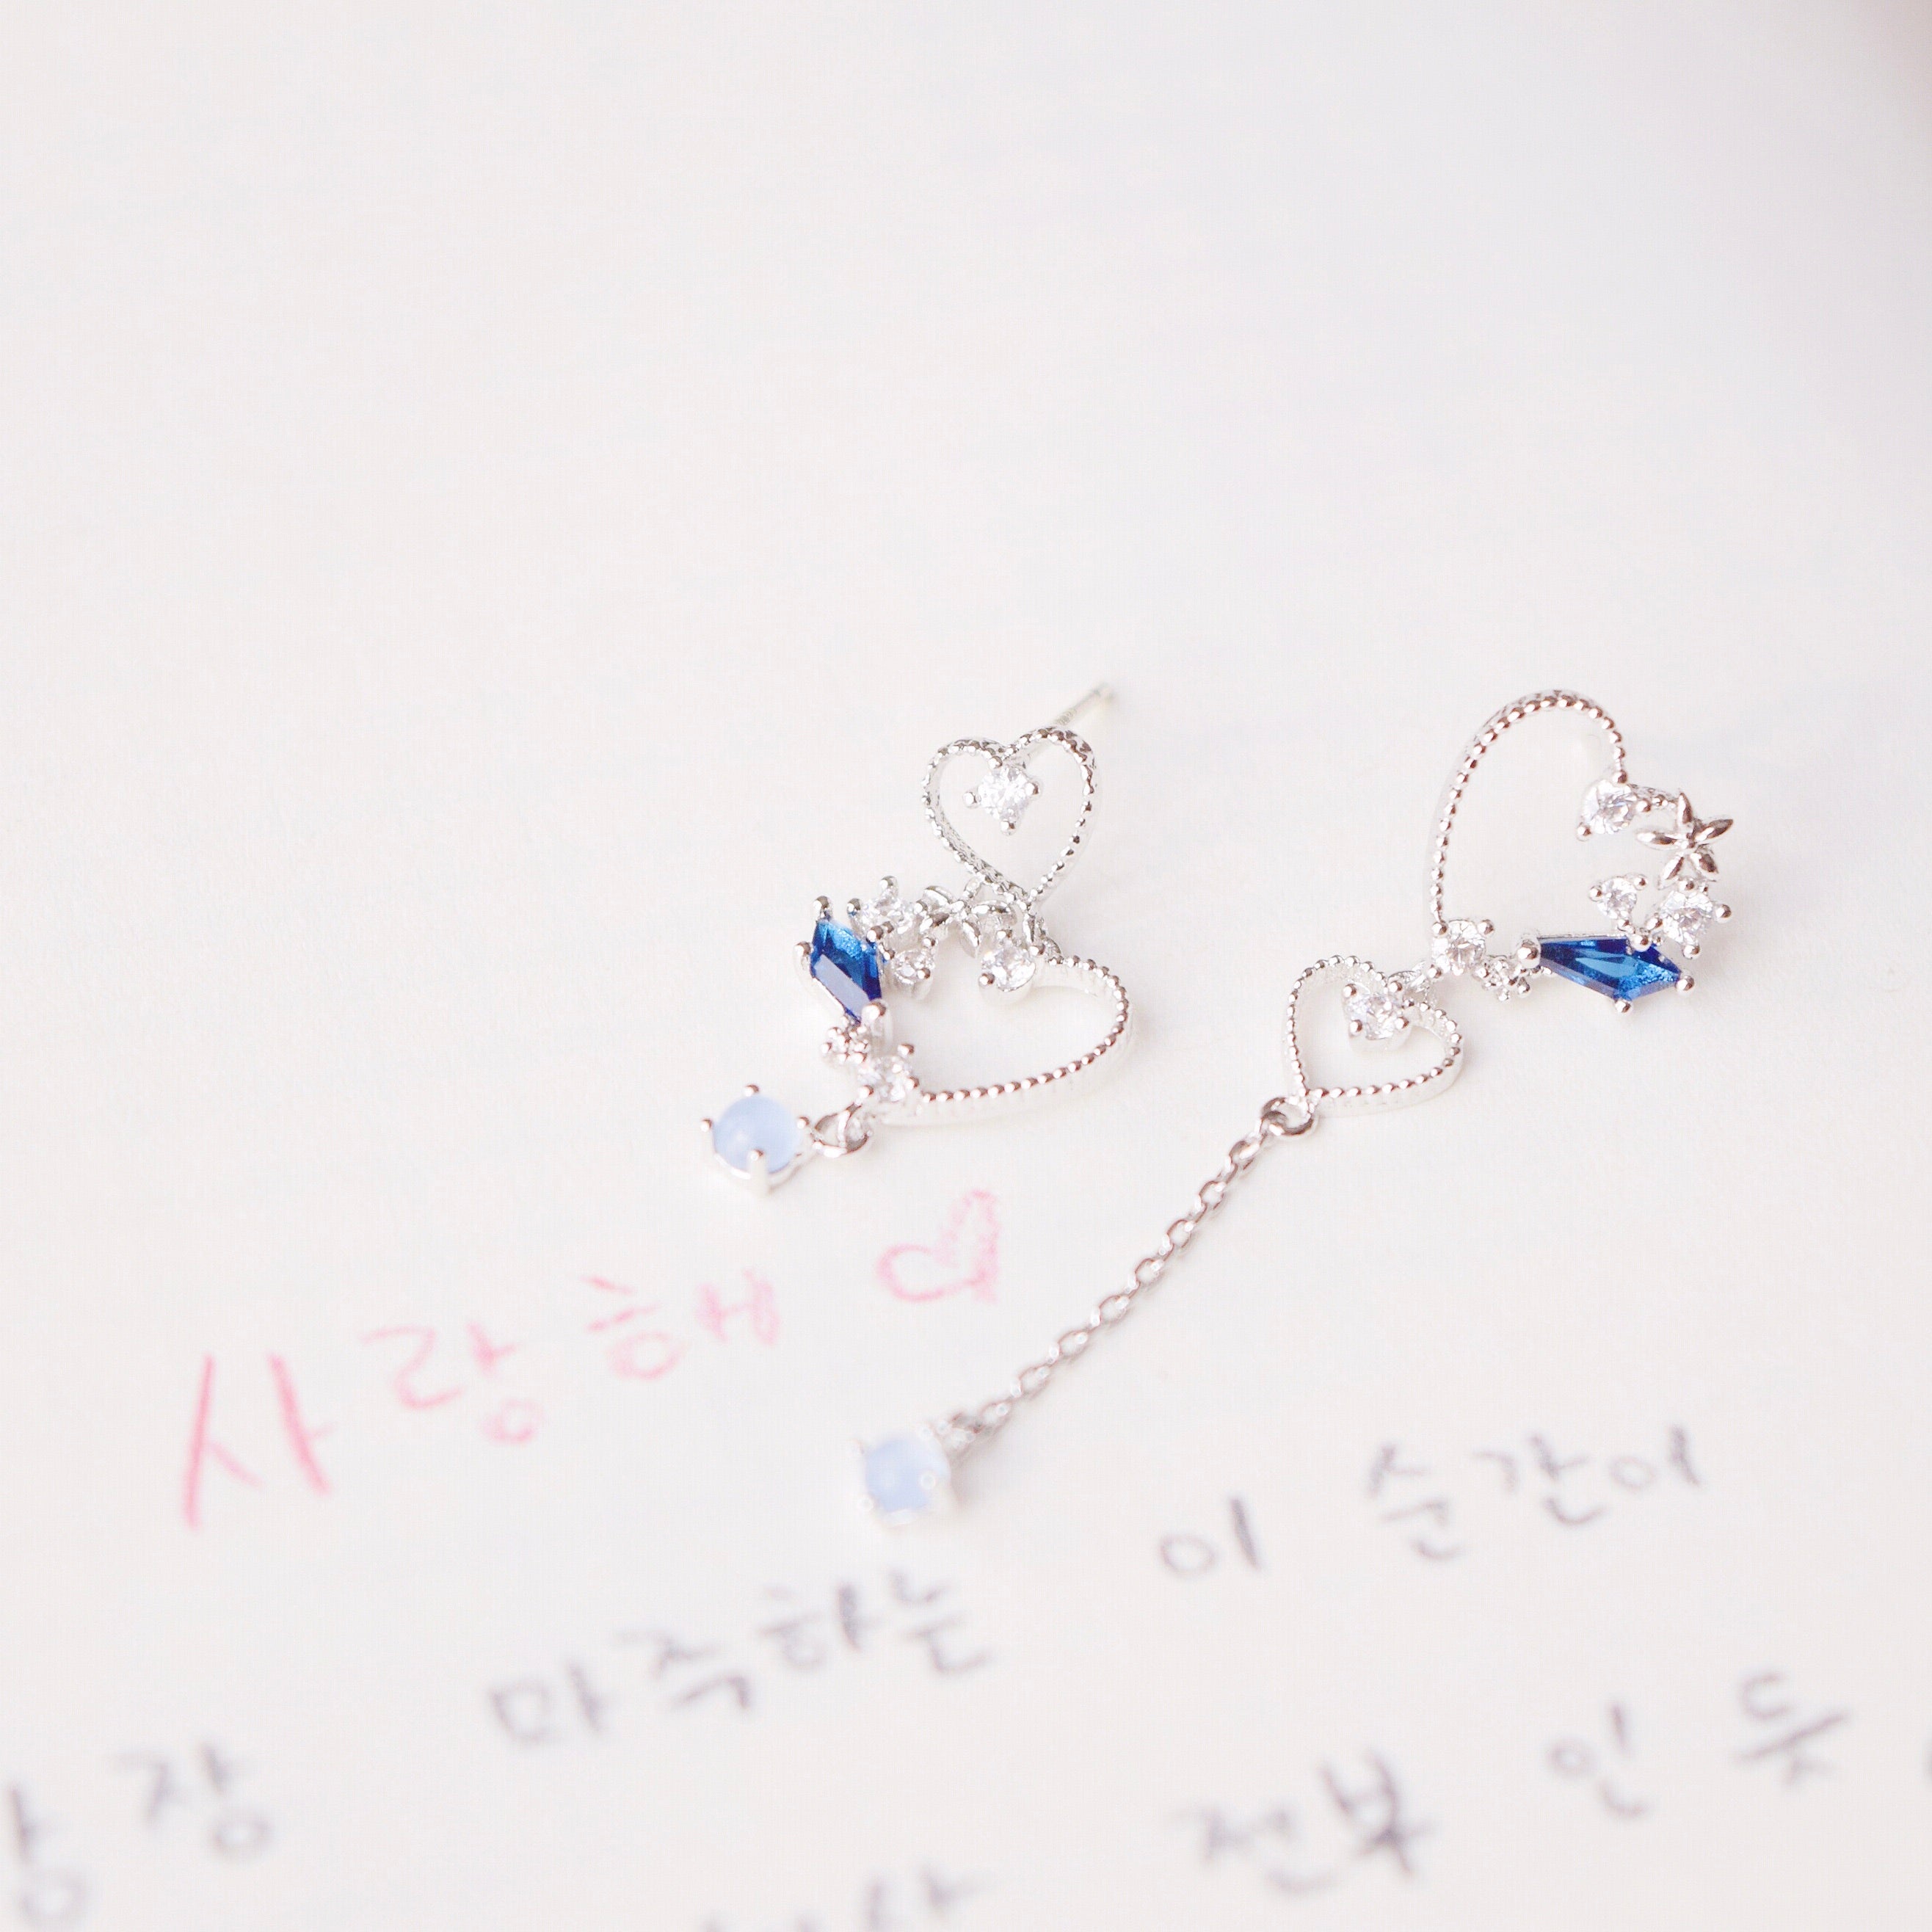 Korea Made Earrings Local Brand in Malaysia Cubic Zirconia Dainty Delicate Minimalist Jewellery Jewelry Bridal Bride Clip On Earrings 925 Sterling Silver